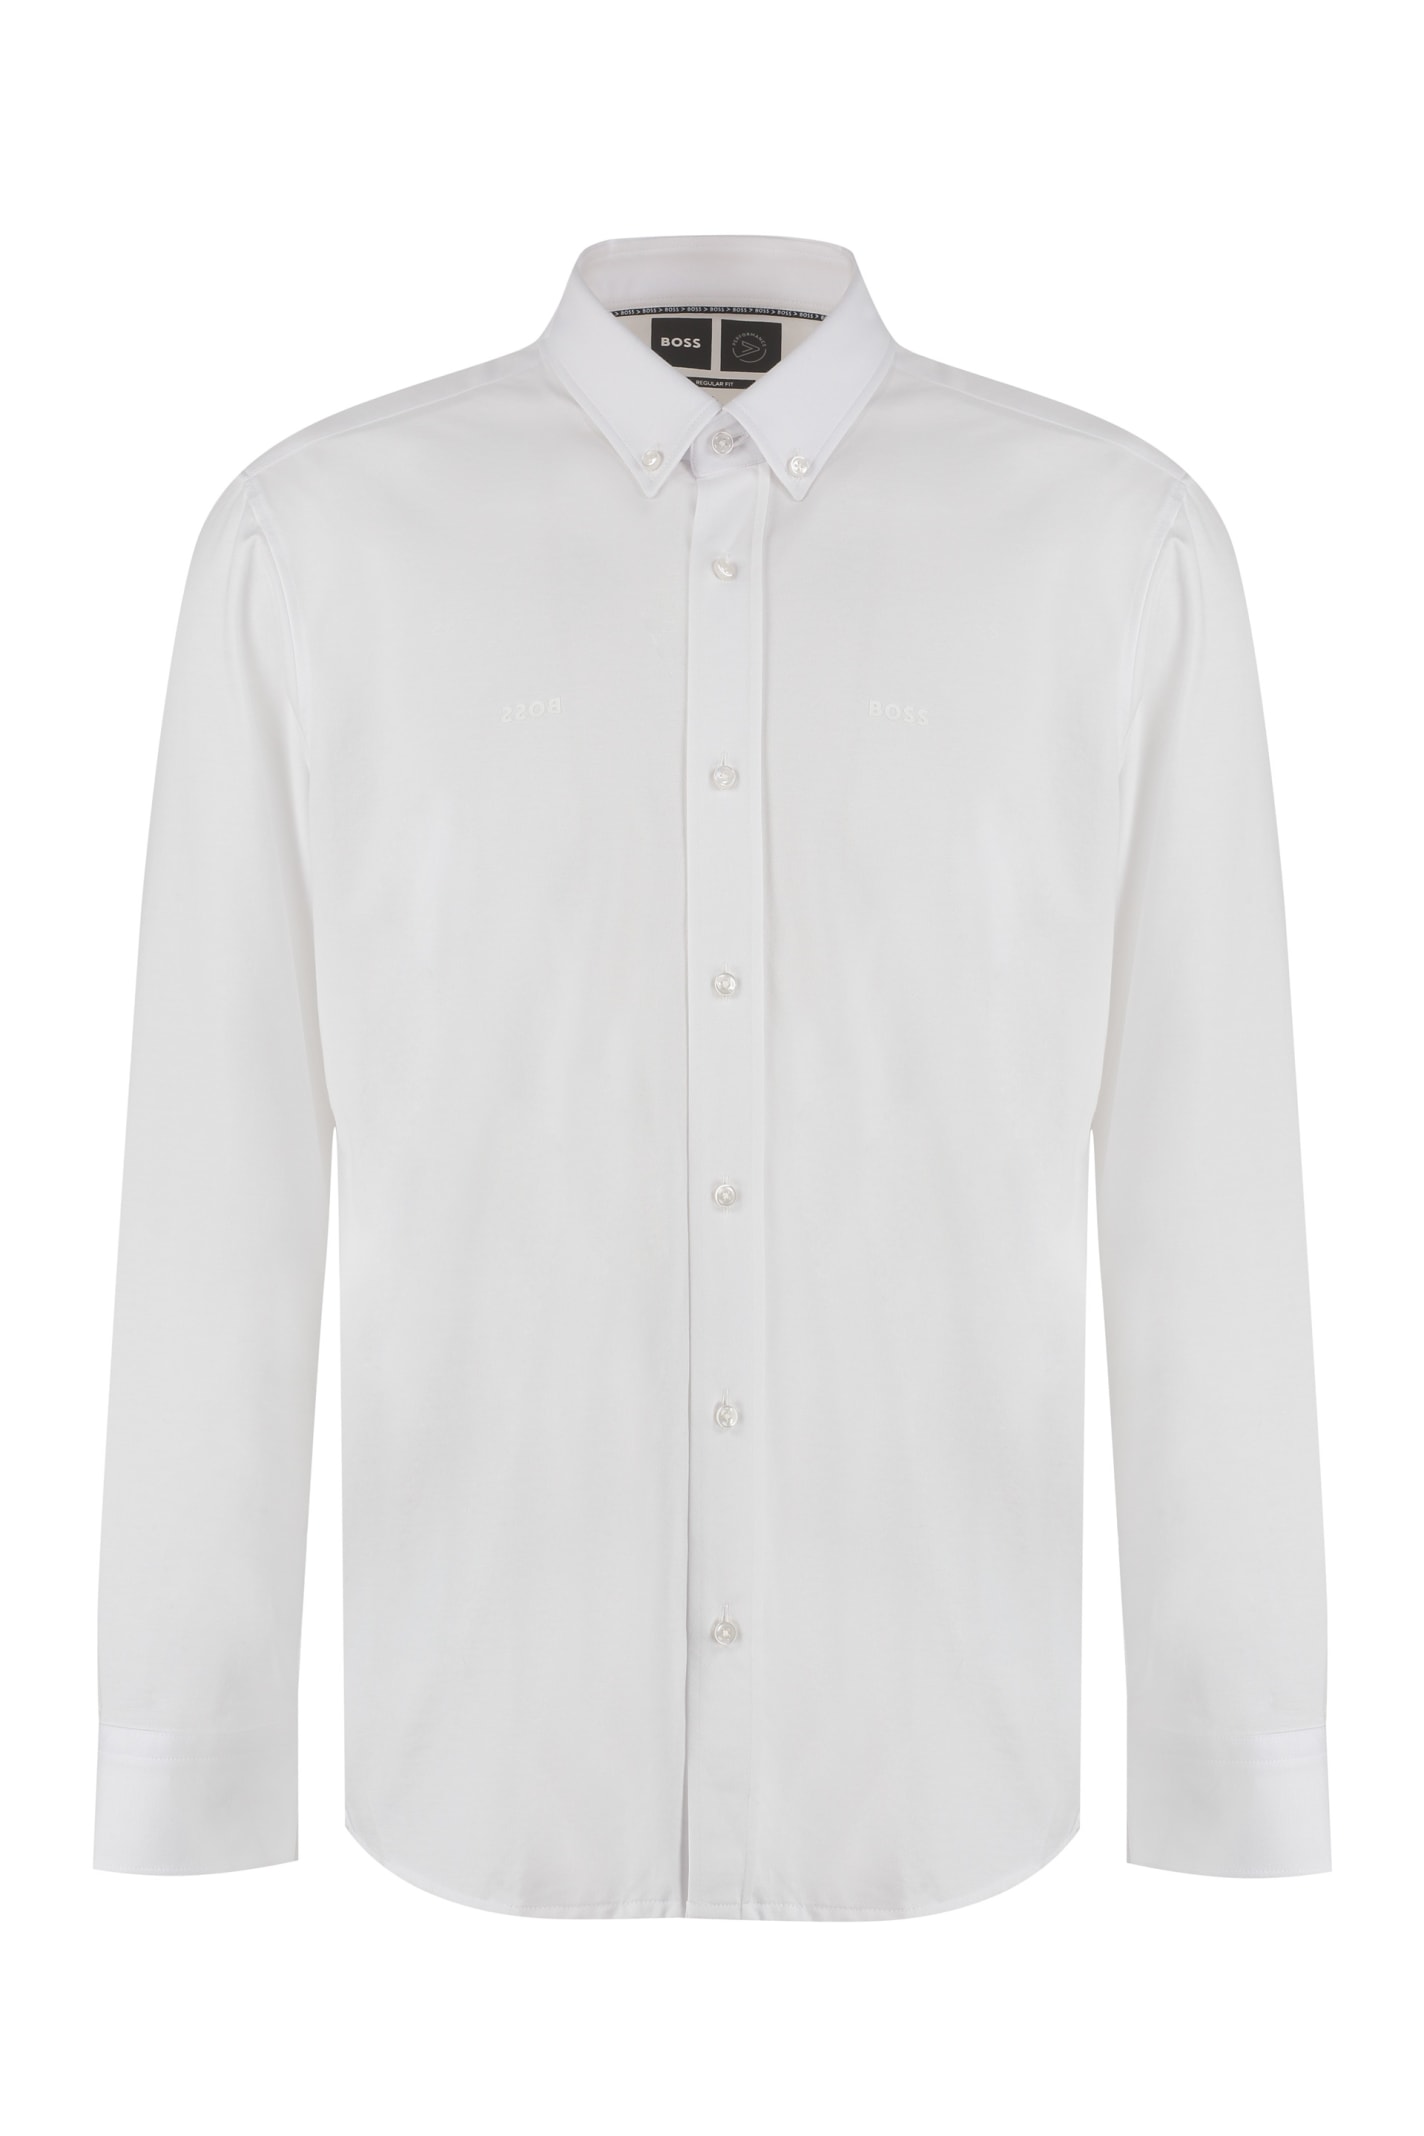 Hugo Boss Button-down Collar Cotton Shirt